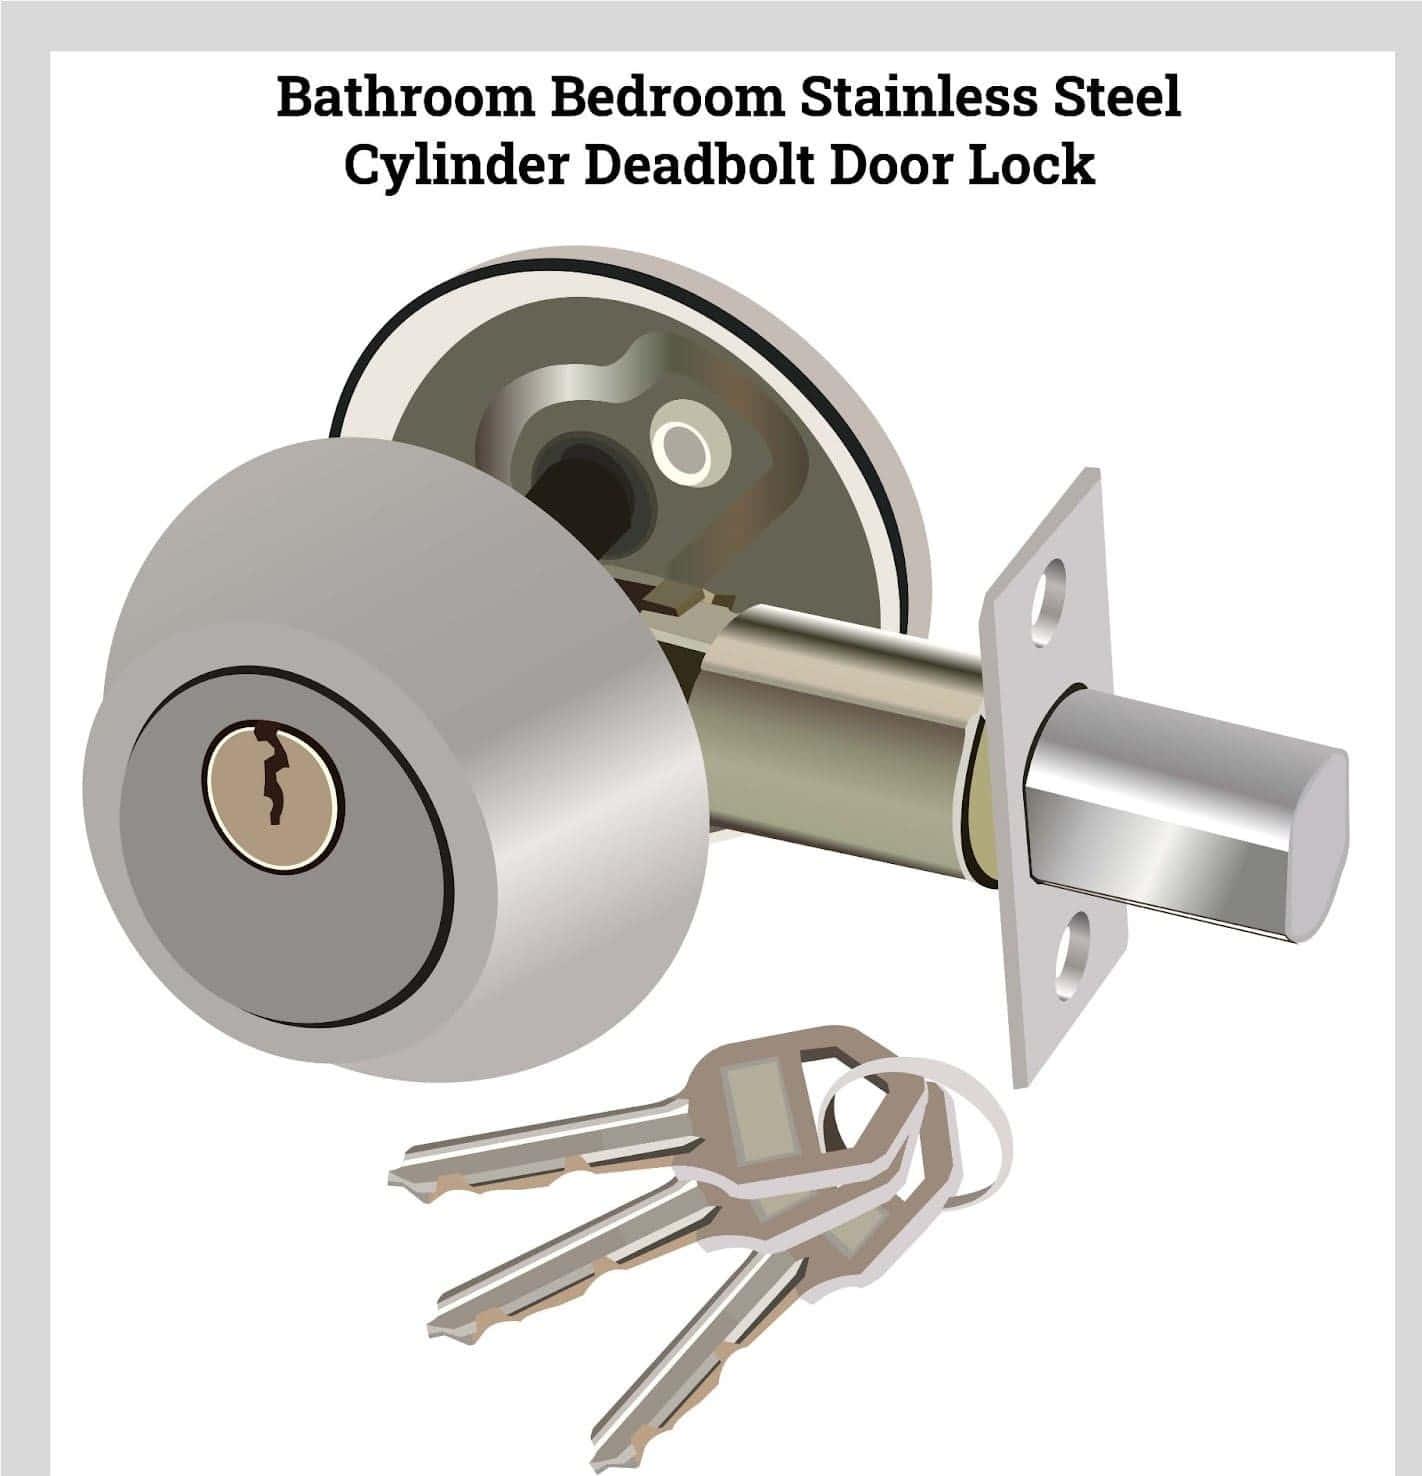 Bathroom Stainless Steel Cylinder Deadbolt Door Lock